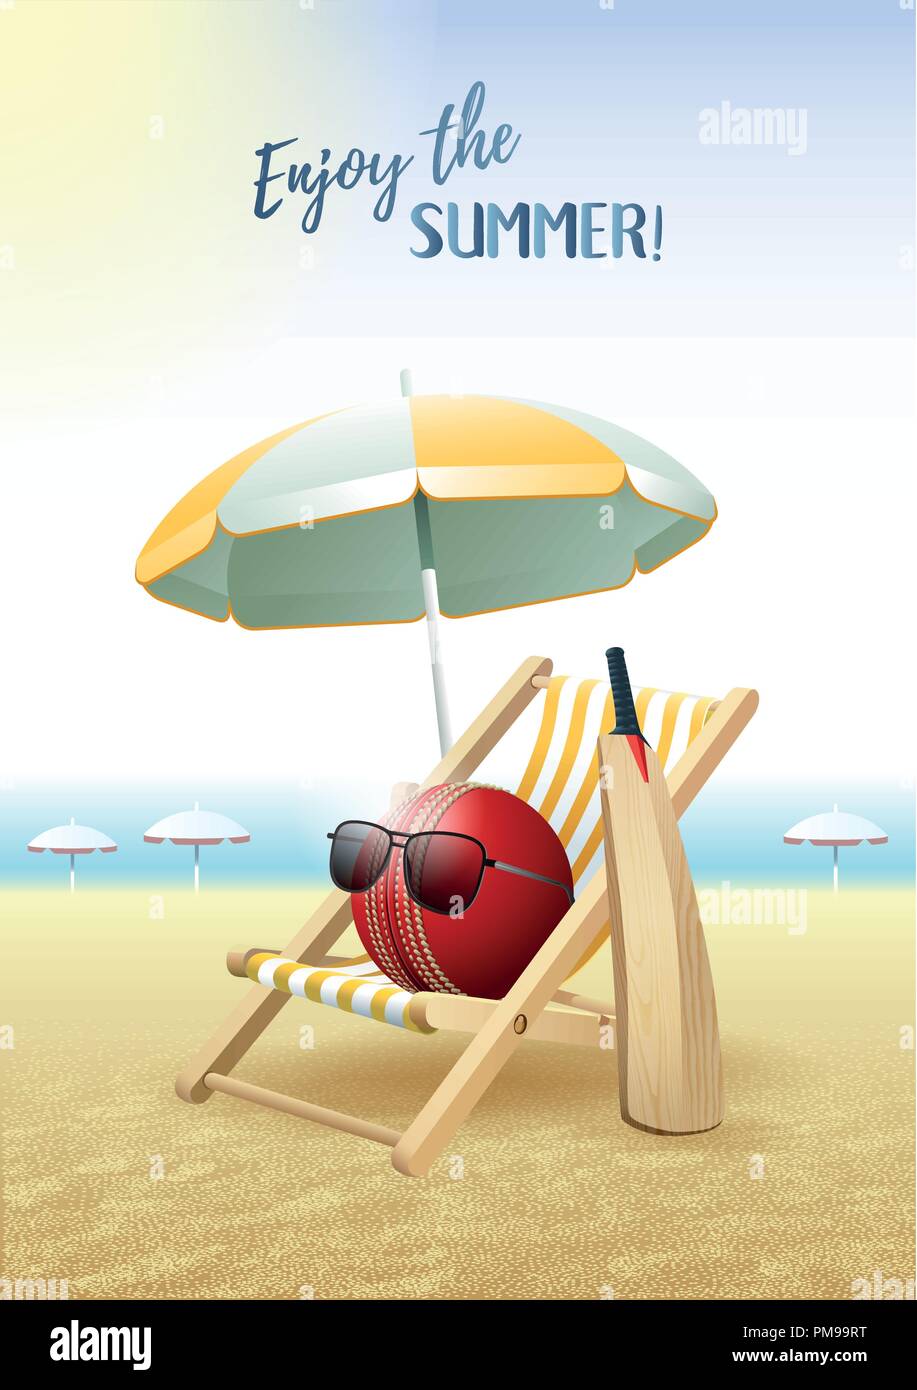 Enjoy the Summer! Sports card. Cricket ball with sunglasses, beach umbrella, deck chair and wooden bat on the sand beach. Vector illustration. Stock Vector